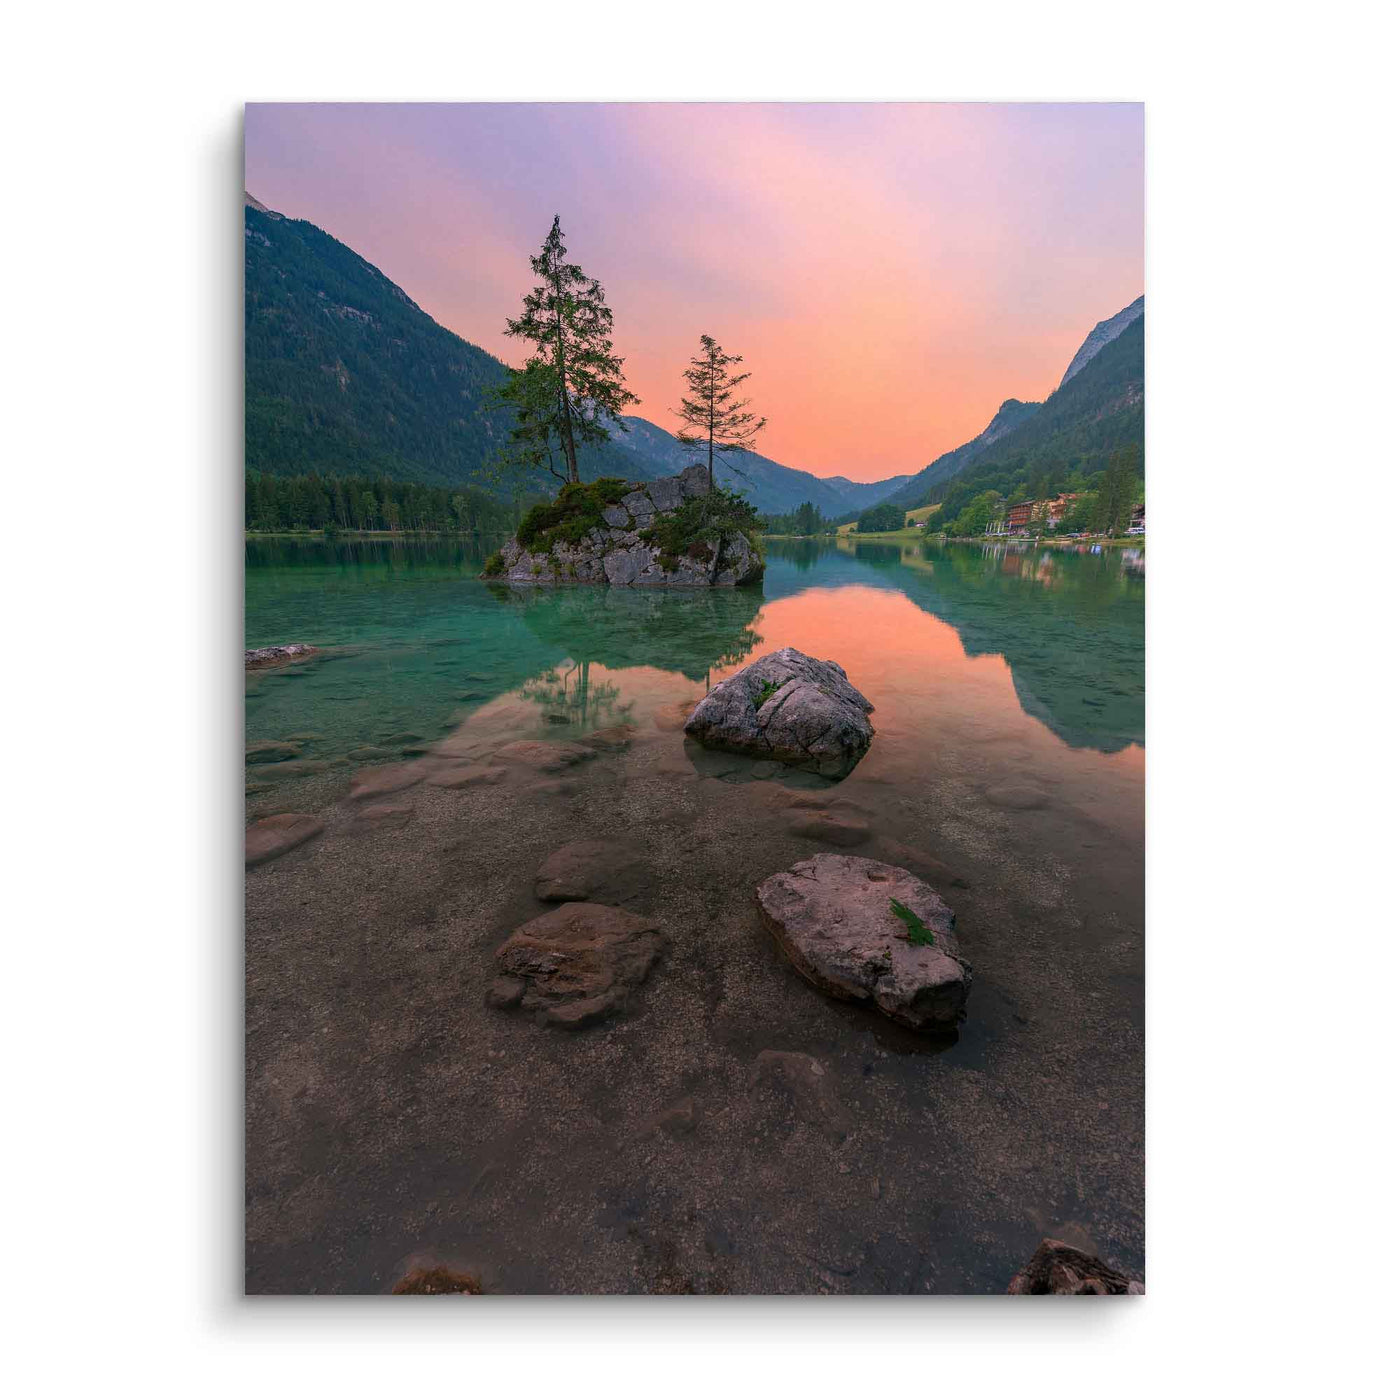 Sunrise at the mountain lake